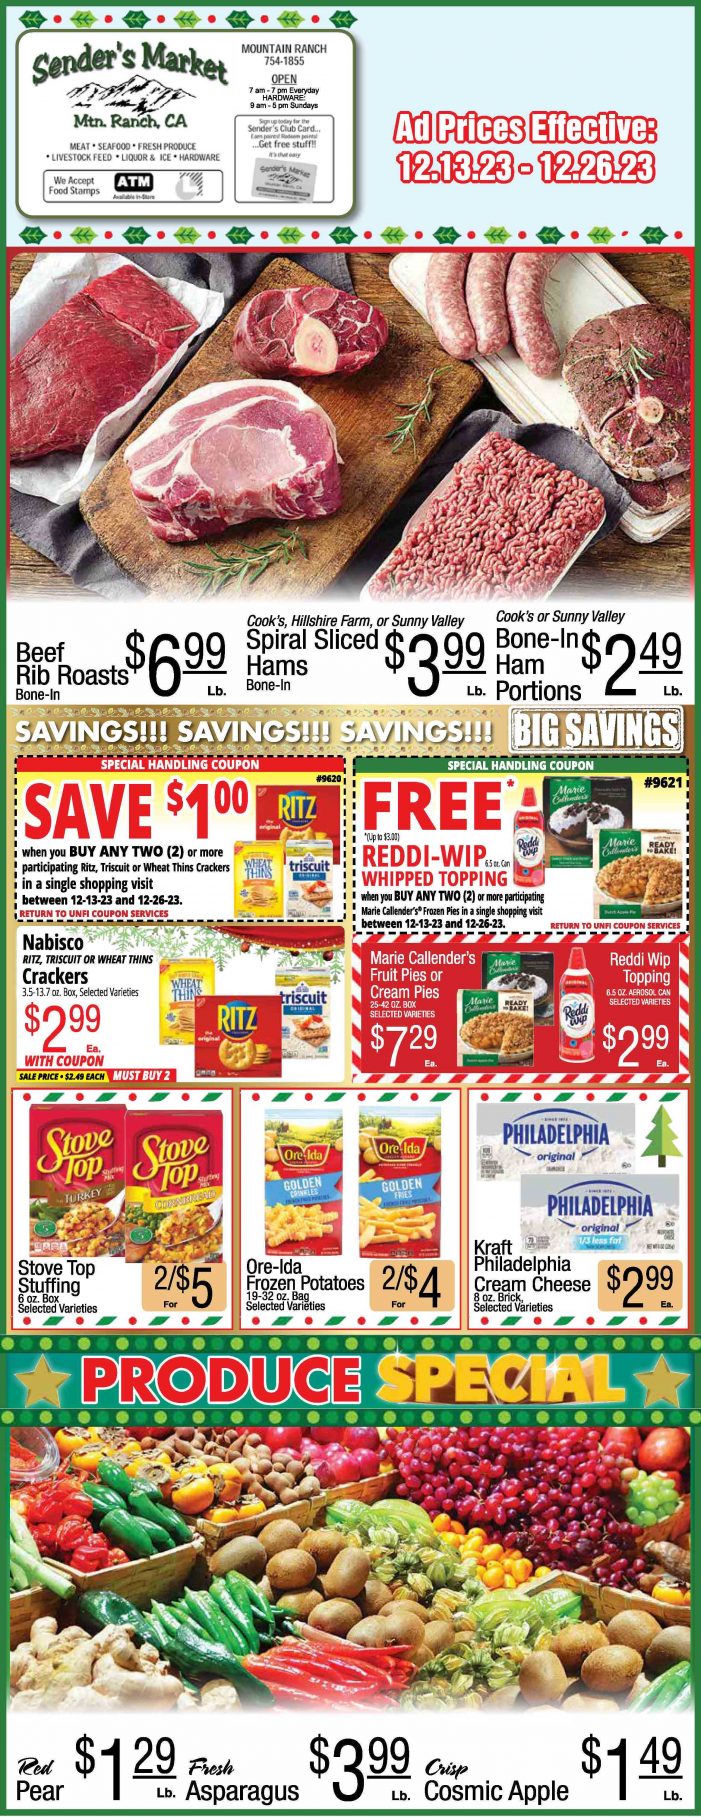 Sender’s Market Big Christmas Ad & Grocery Specials Through December 26th! Shop Local & Save!!